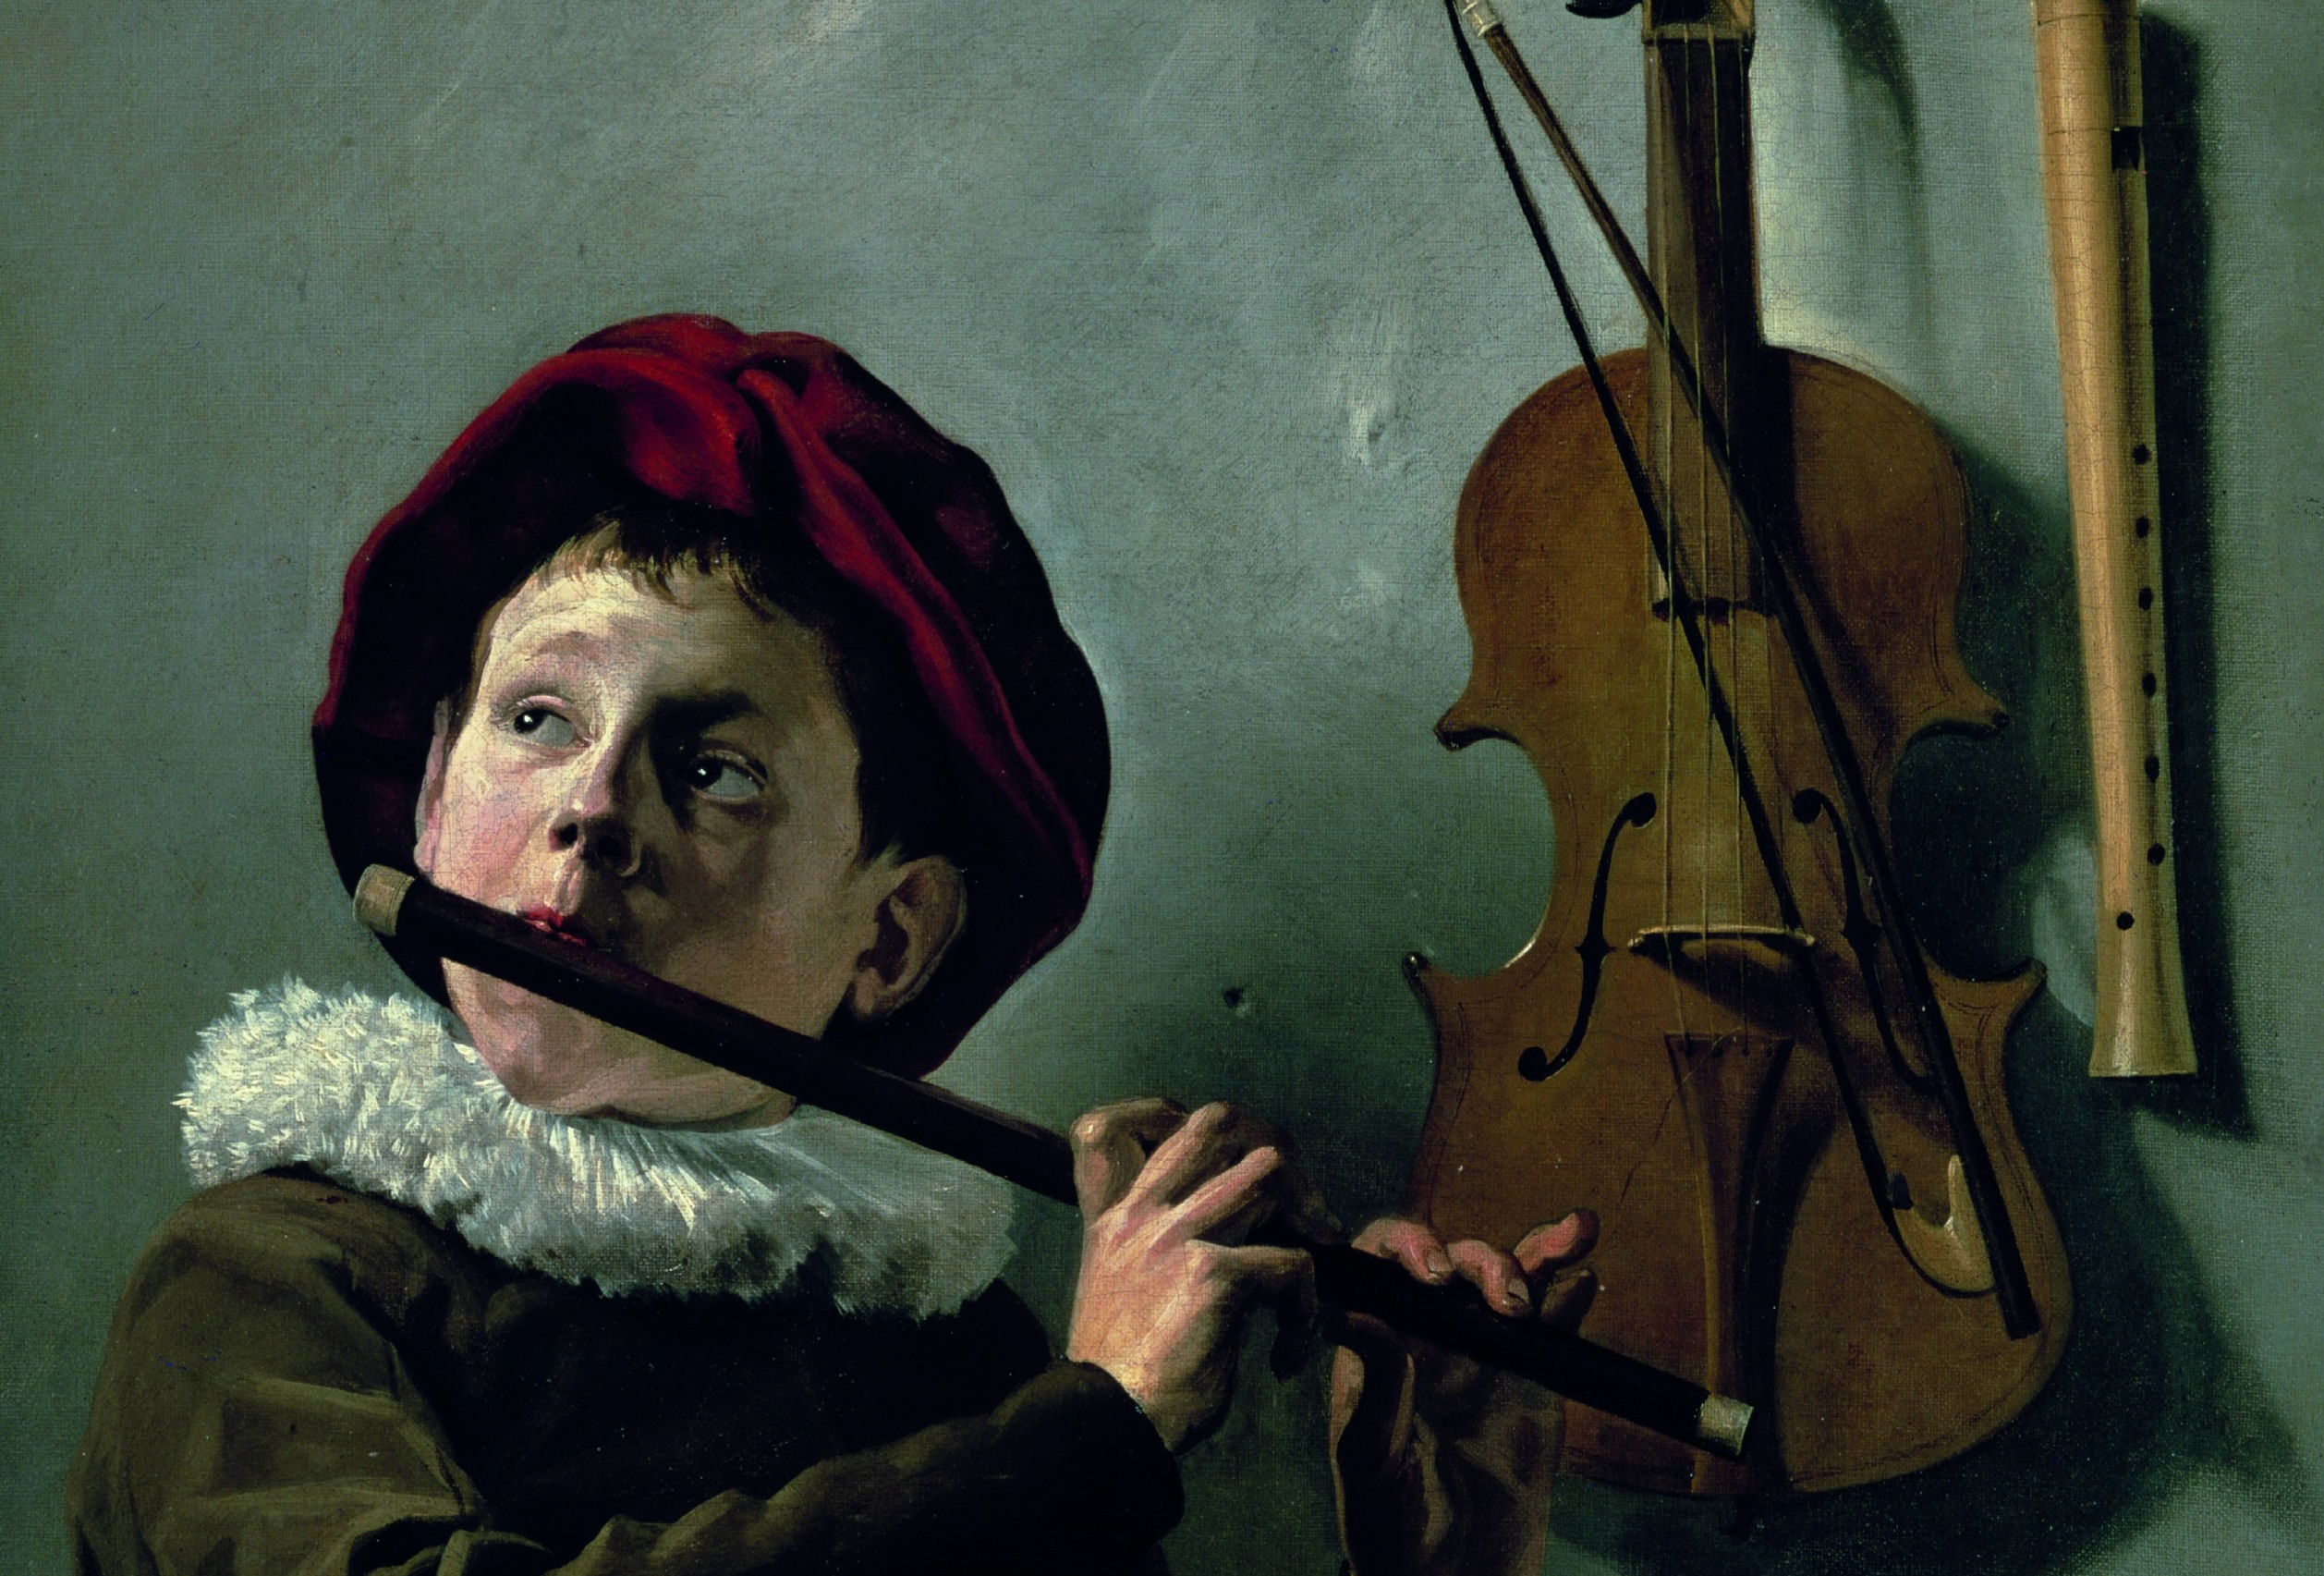 Картина звучание. Юдит Лейстер, «Юный флейтист» (1635 год). Юдит Лейстер Юный флейтист. Лейстер мальчик флейтист. Юдит Лейстер Юный флейтист 1635 г..